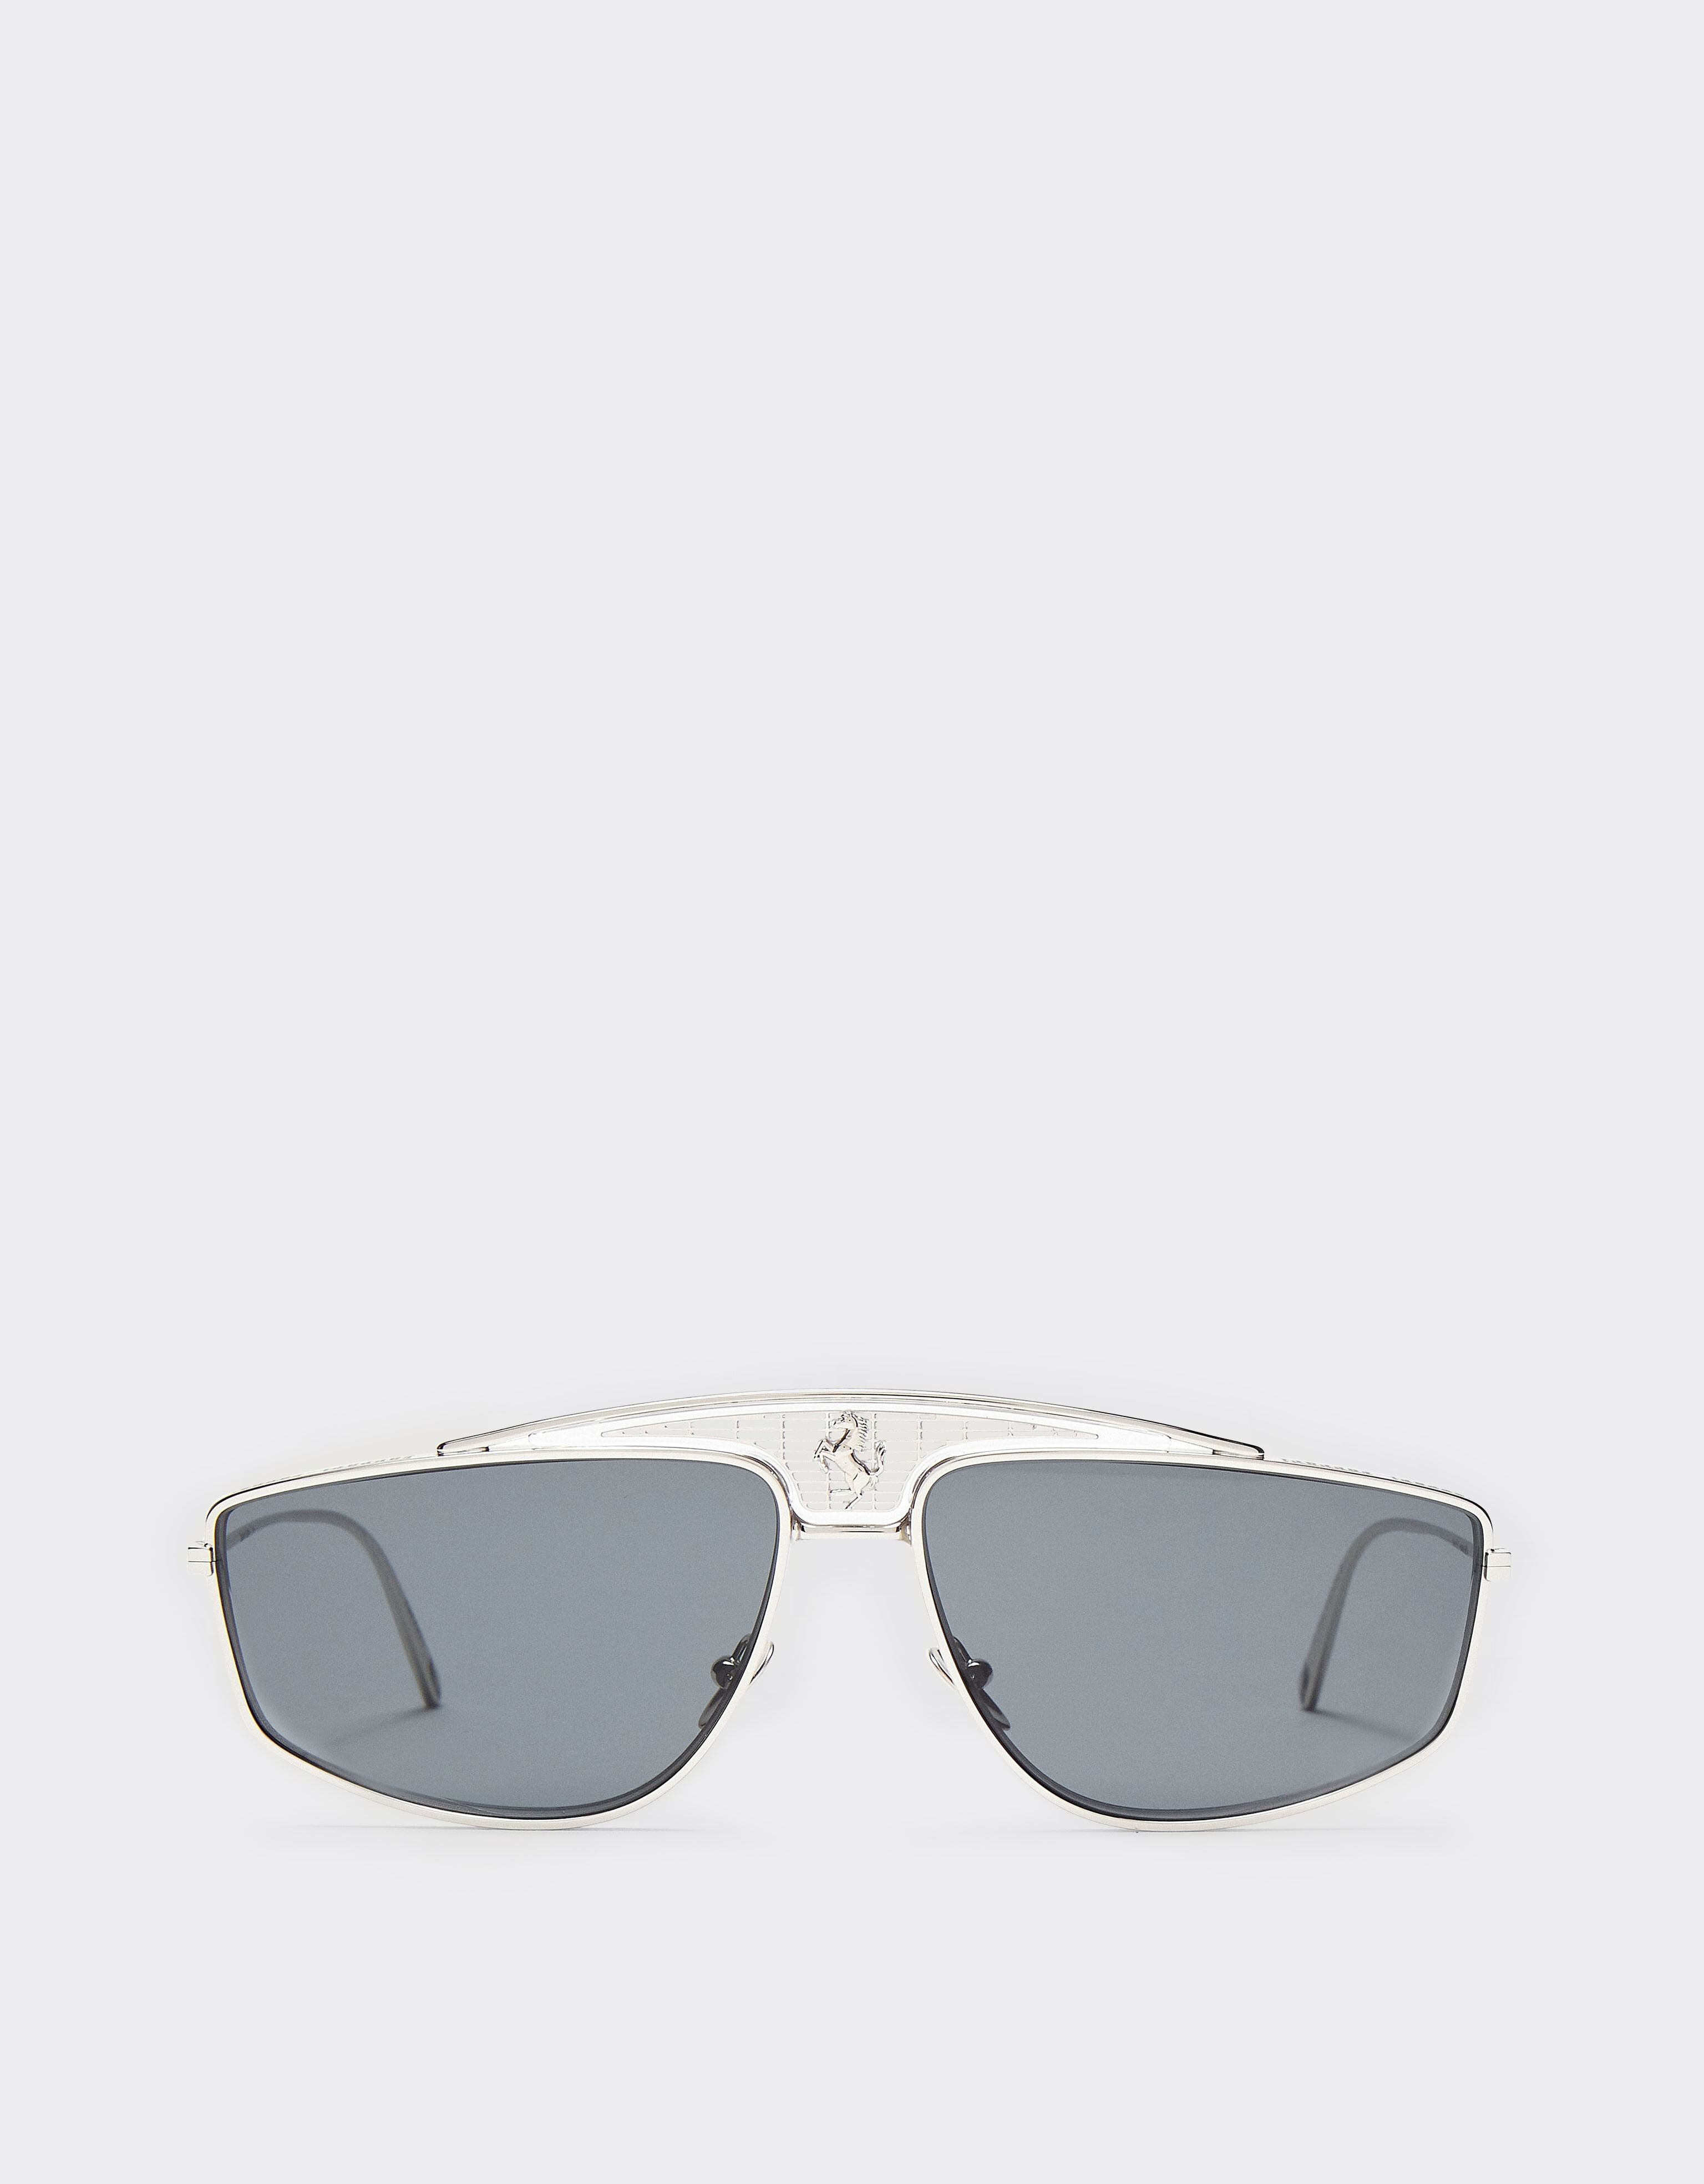 Ferrari Ferrari sunglasses with dark grey lenses Silver F1248f